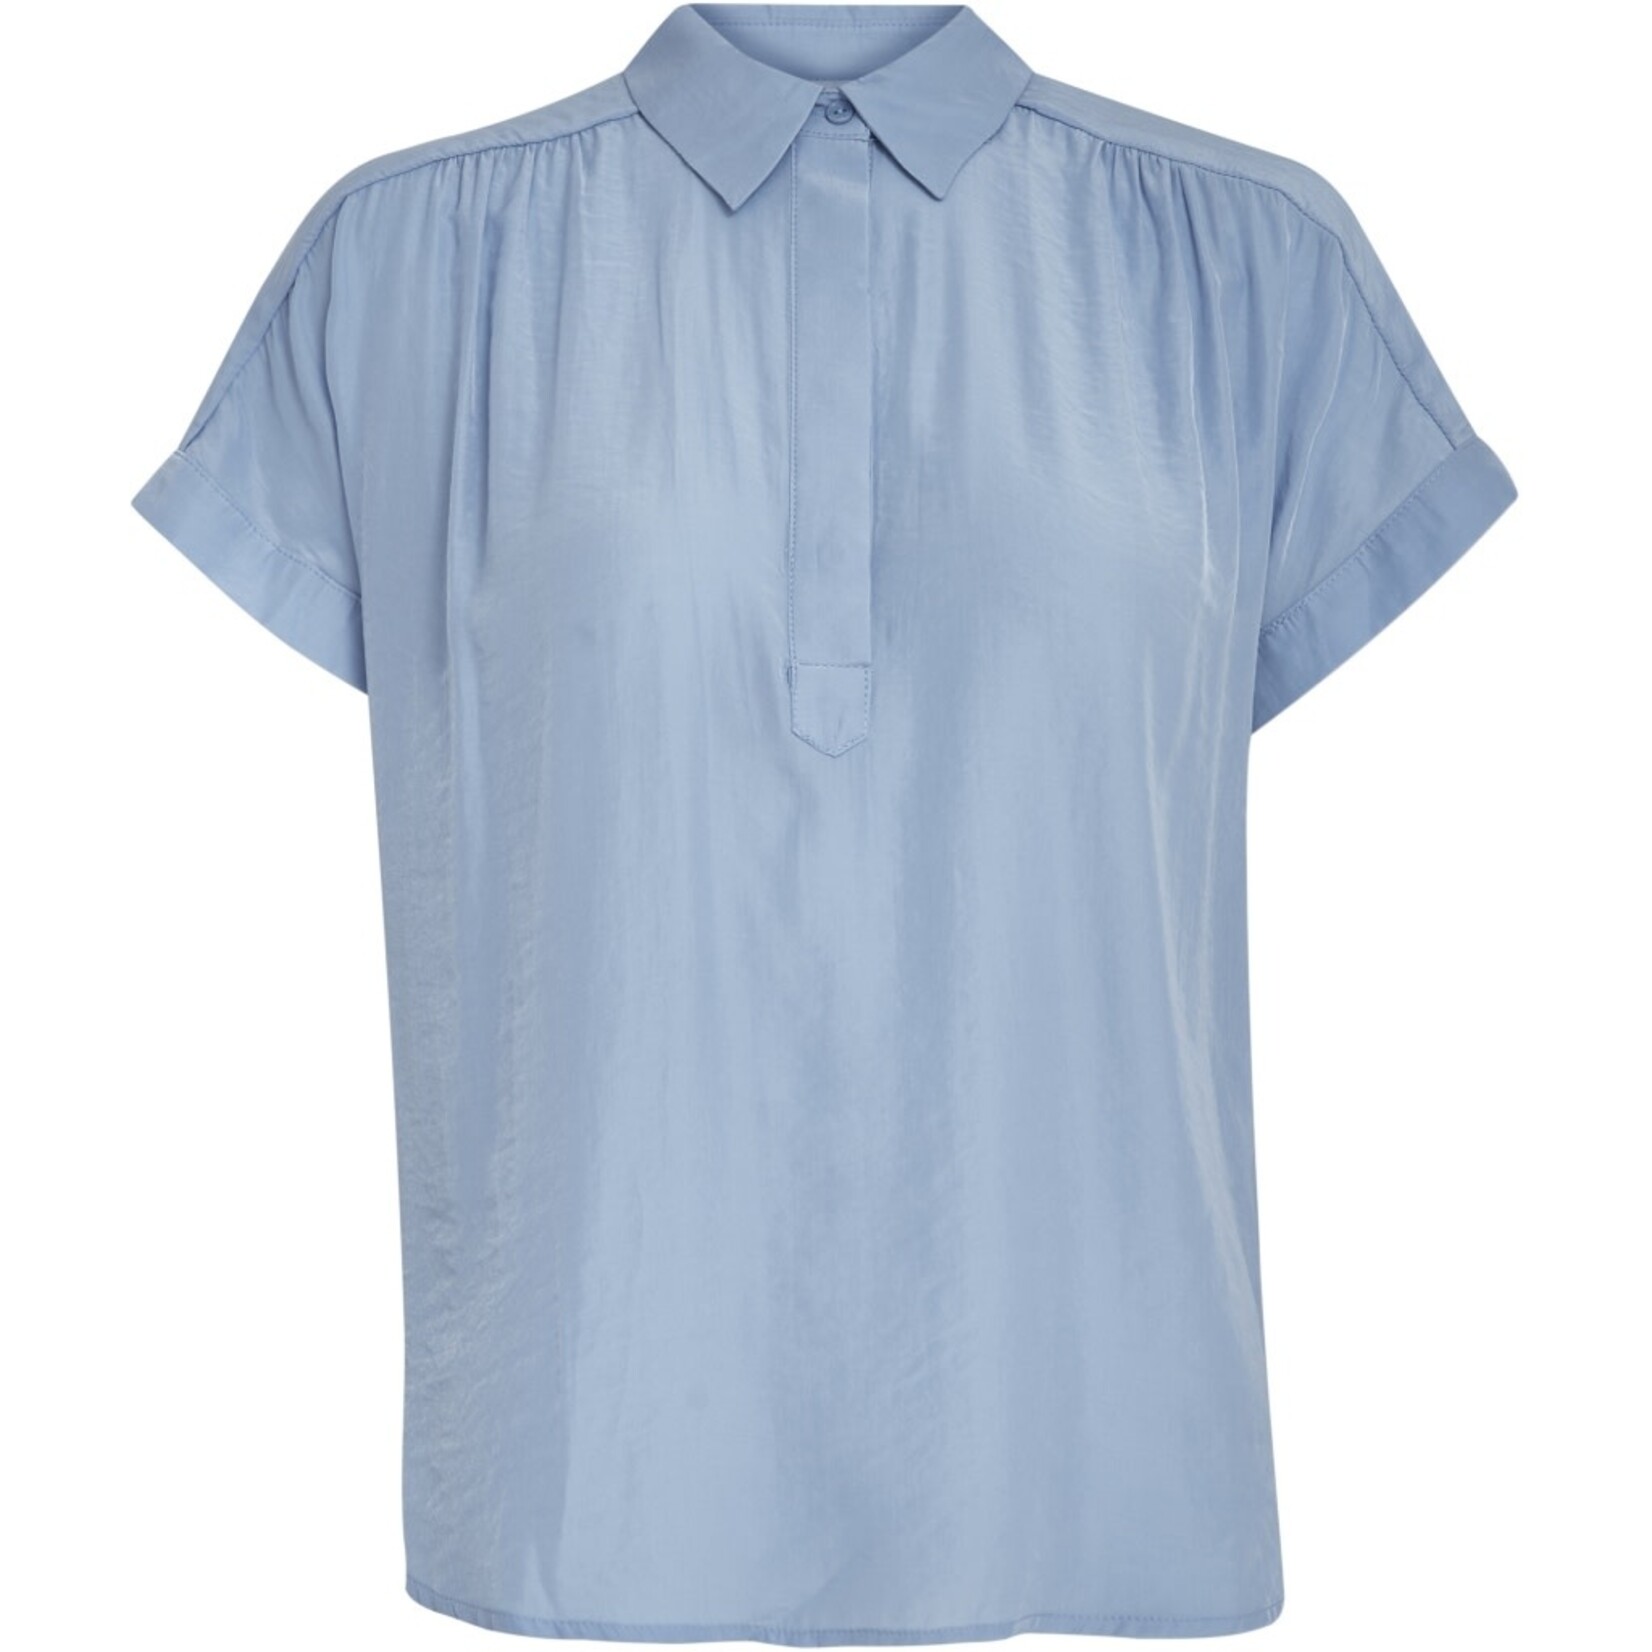 Minus Ayame short sleeve blouse Vista blue